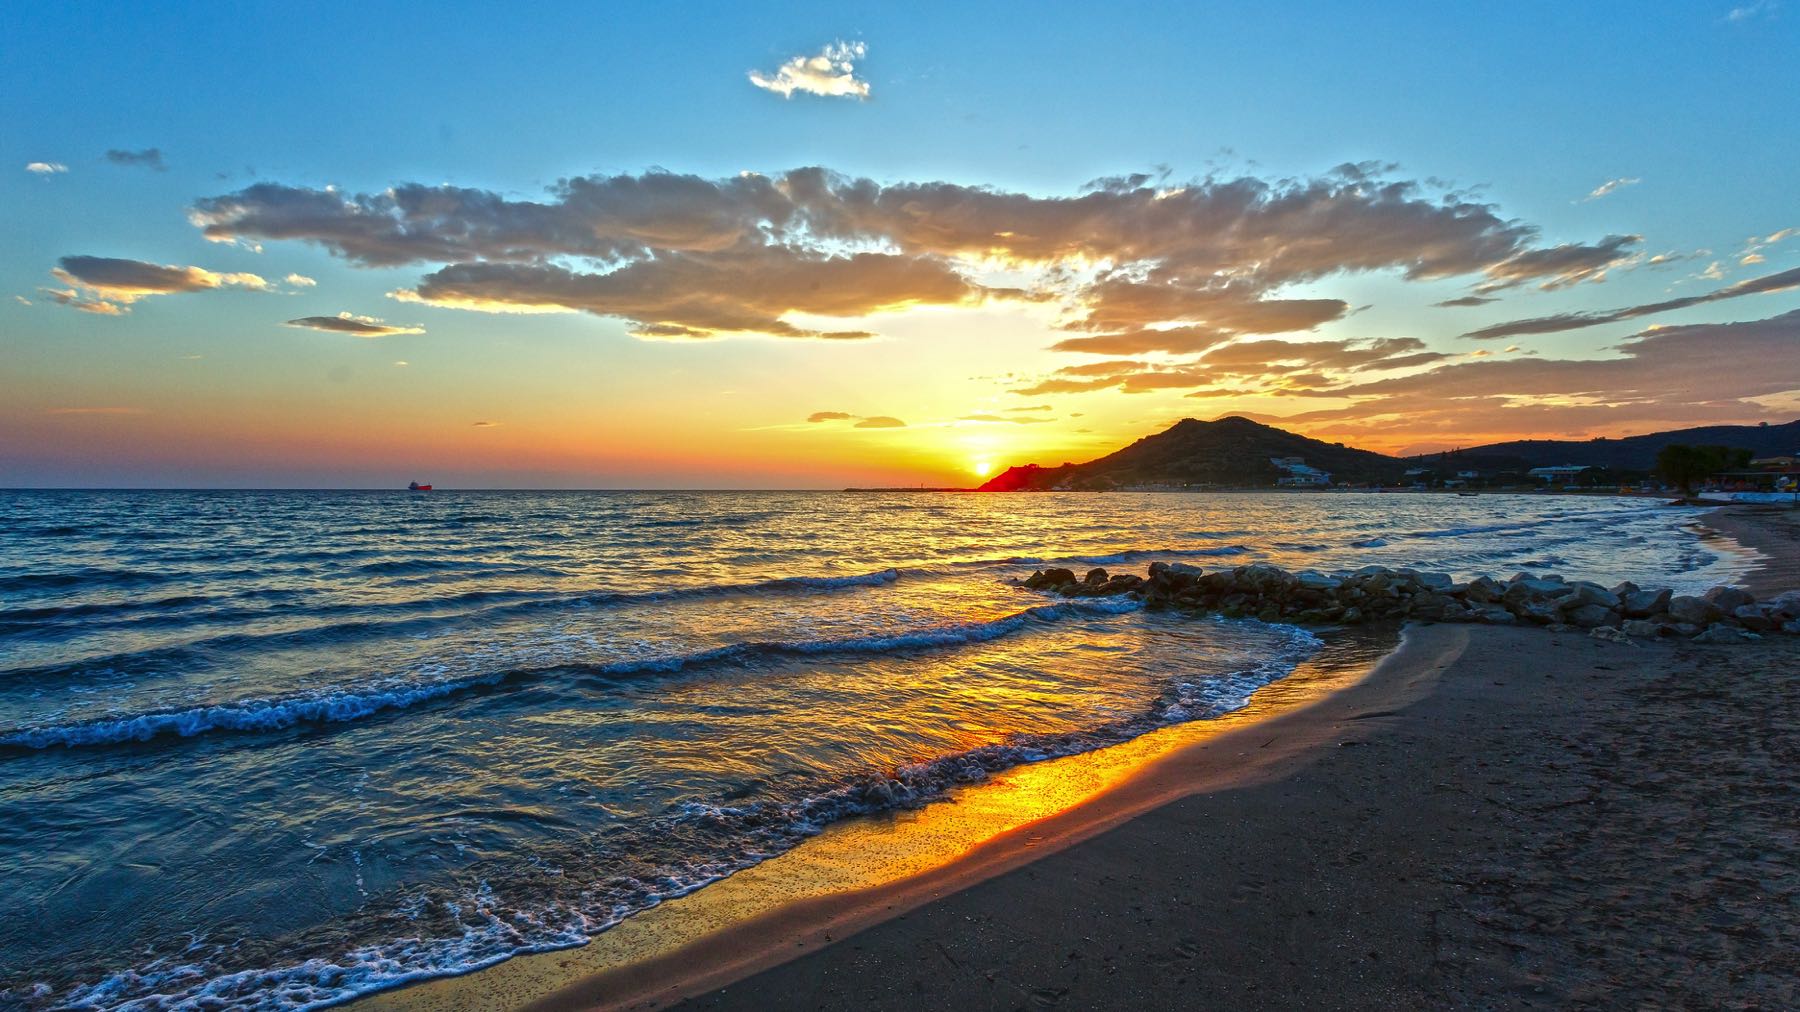 La plage d'Alykes à Zante en Grèce : Guide de voyage - La plage d'Alykes à Zante en Grèce : Guide de voyage